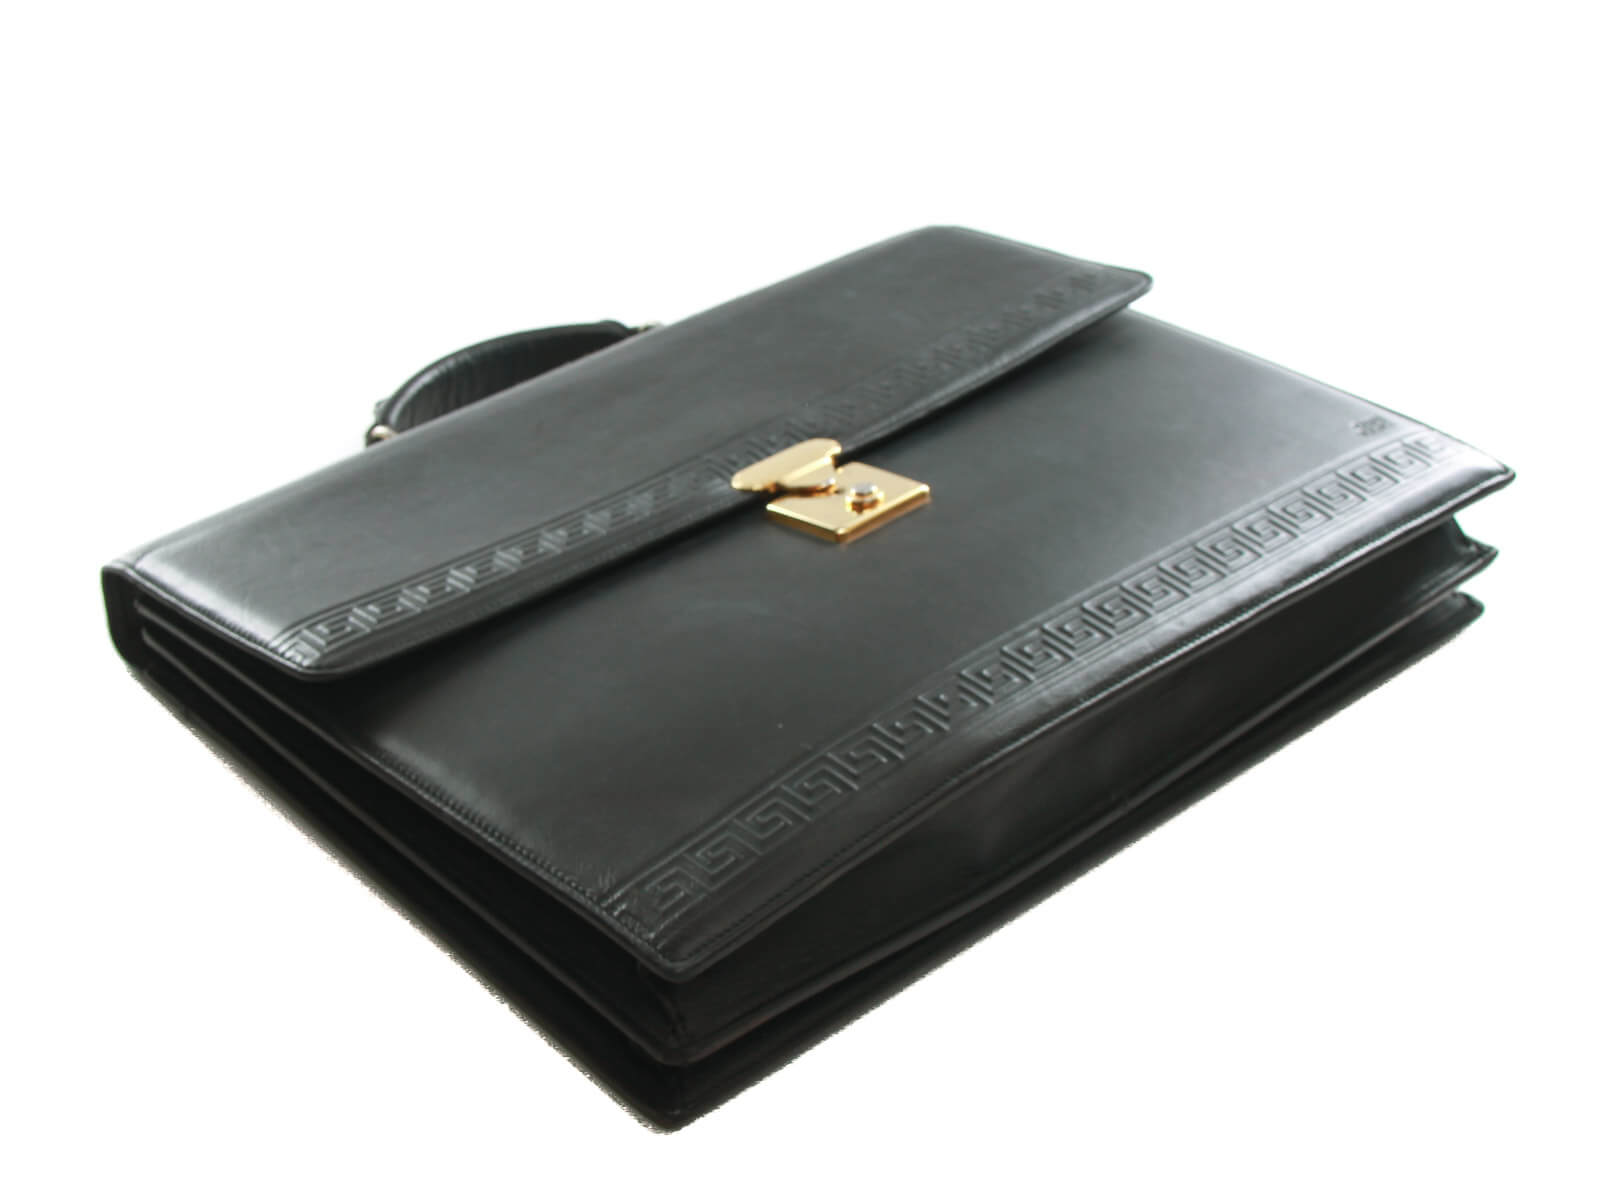 Limited Edition Versace Leather Handbag Luxury Brand Kin – Toren Store